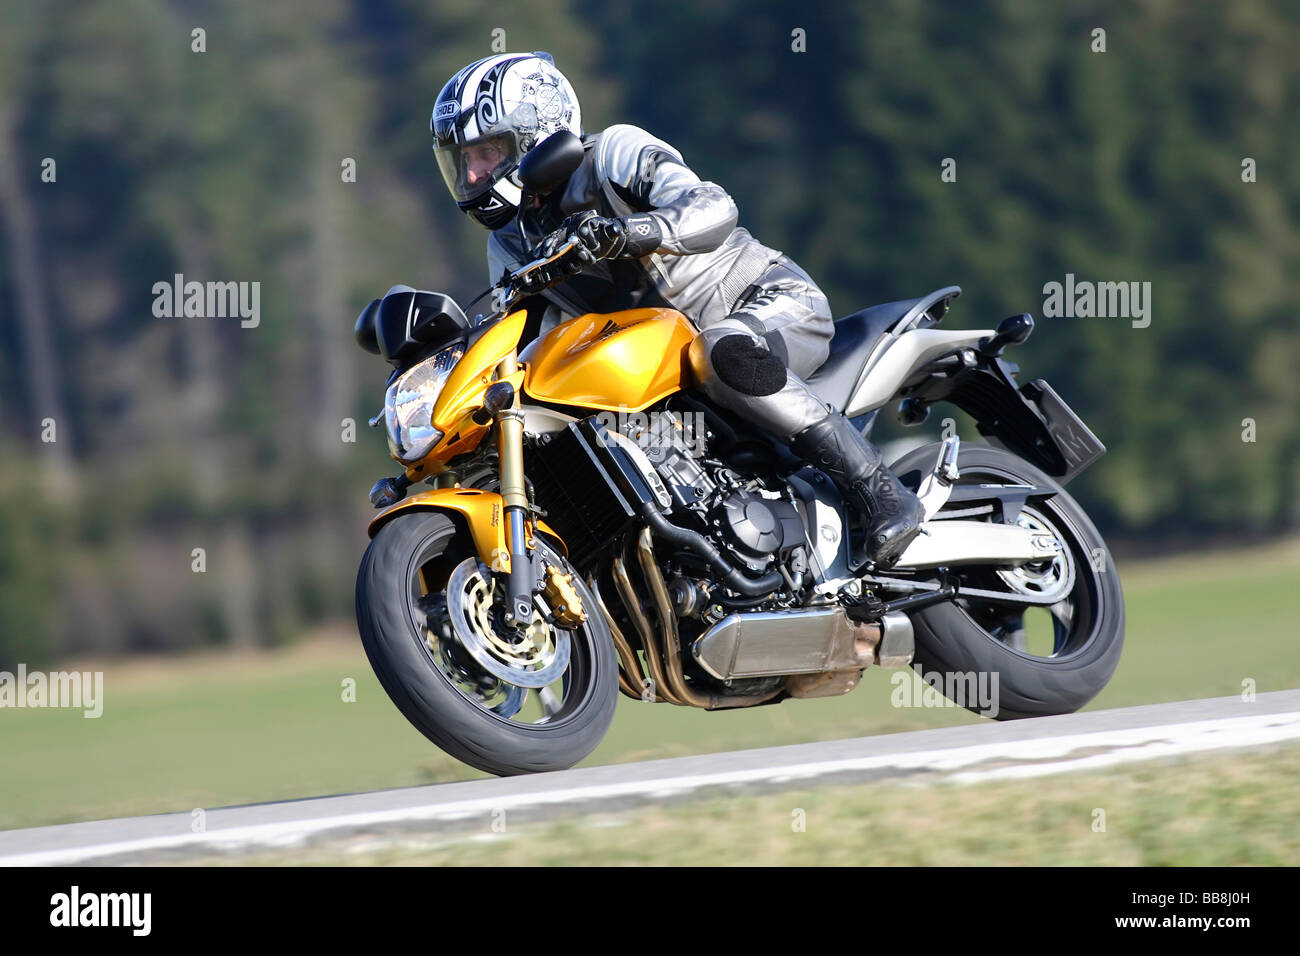 Honda Hornet motorcycle, riding shot Stock Photo - Alamy